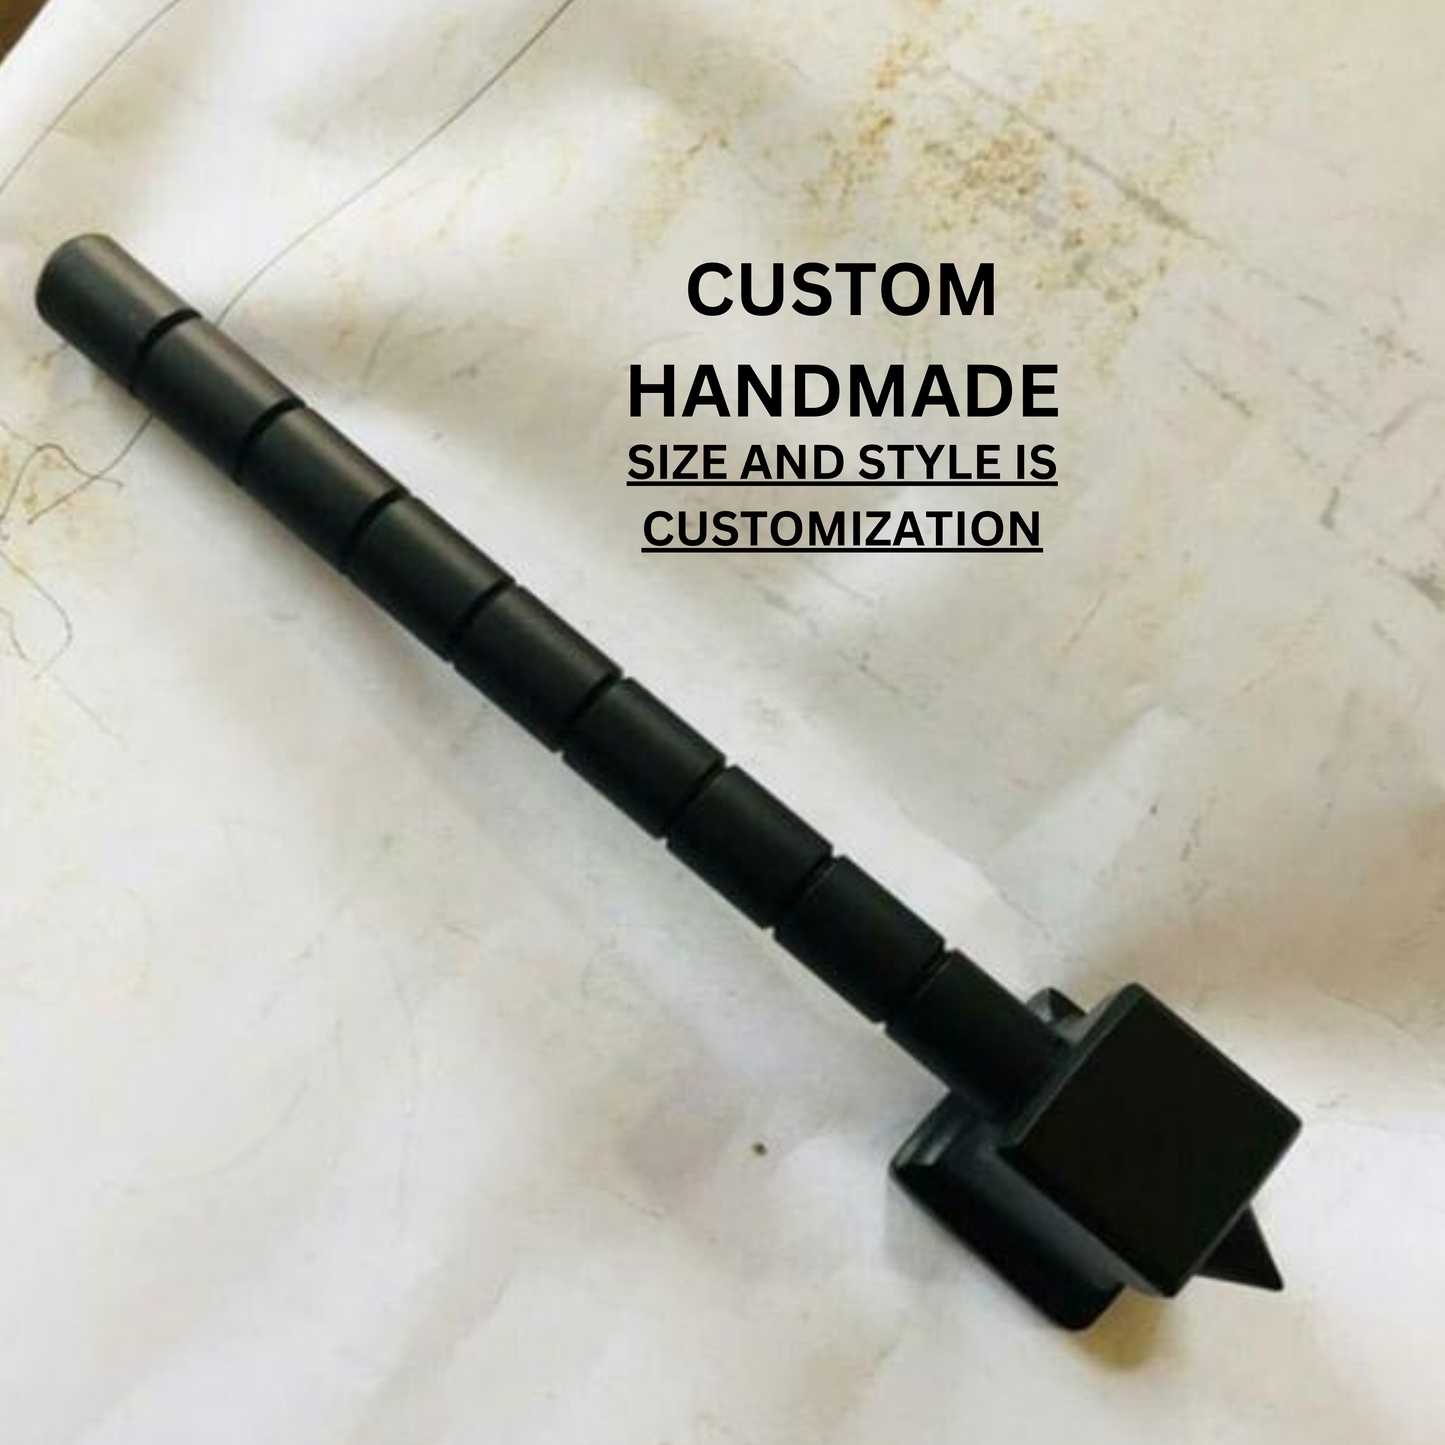 Custom Handmade Jet Black Hammer | Father's Day Gift | Best Gift Idea Shop .